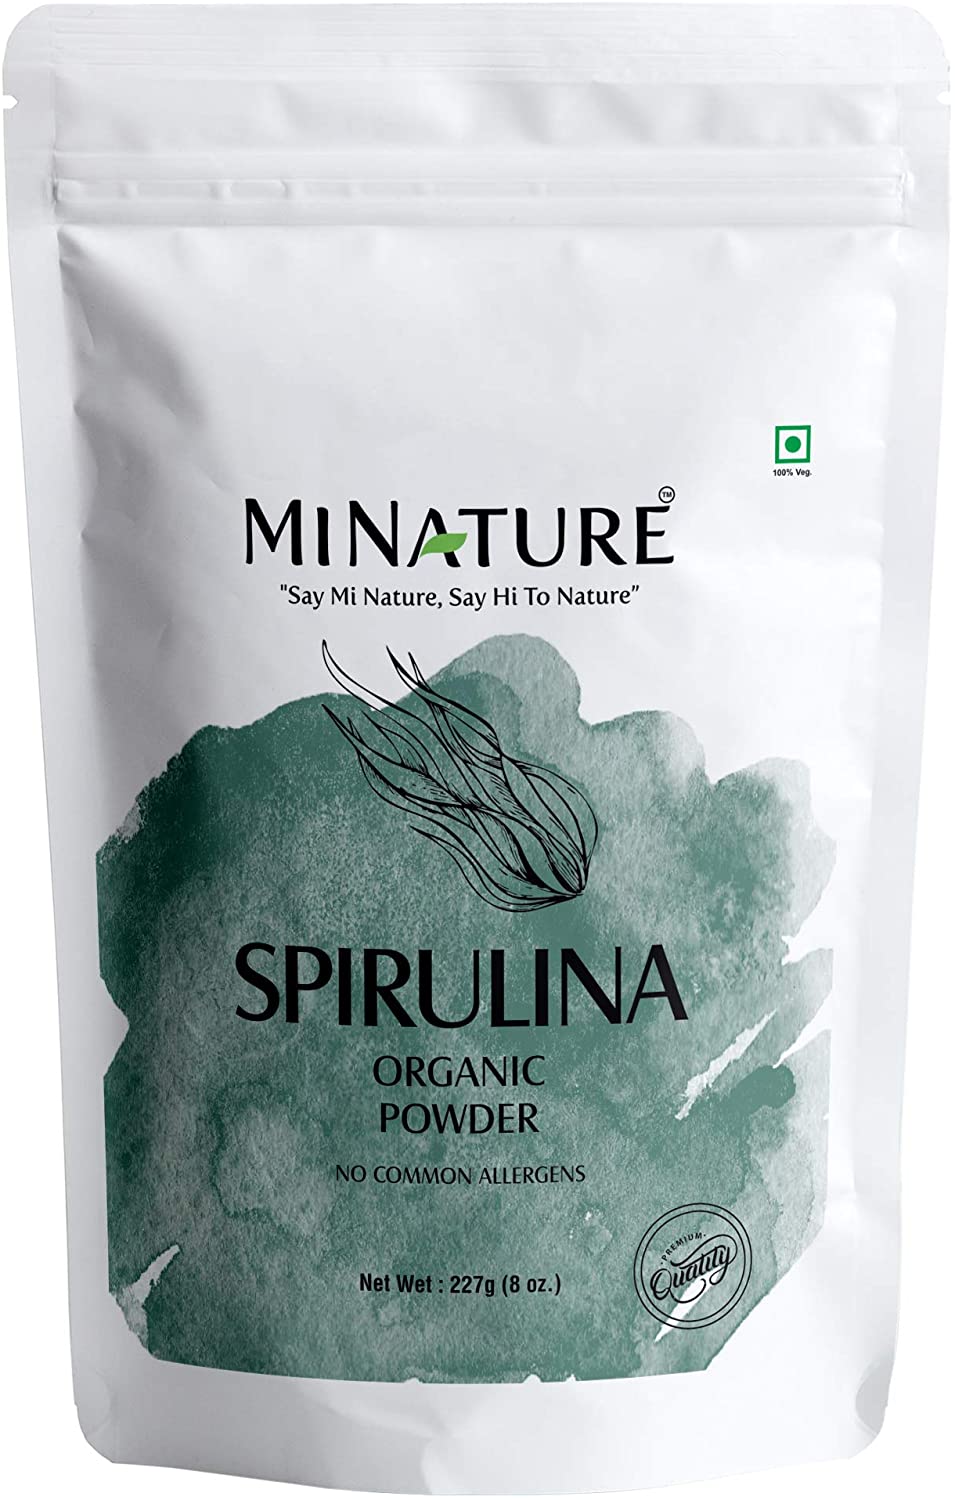 Organic Spirulina Powder 227g - USDA Certified